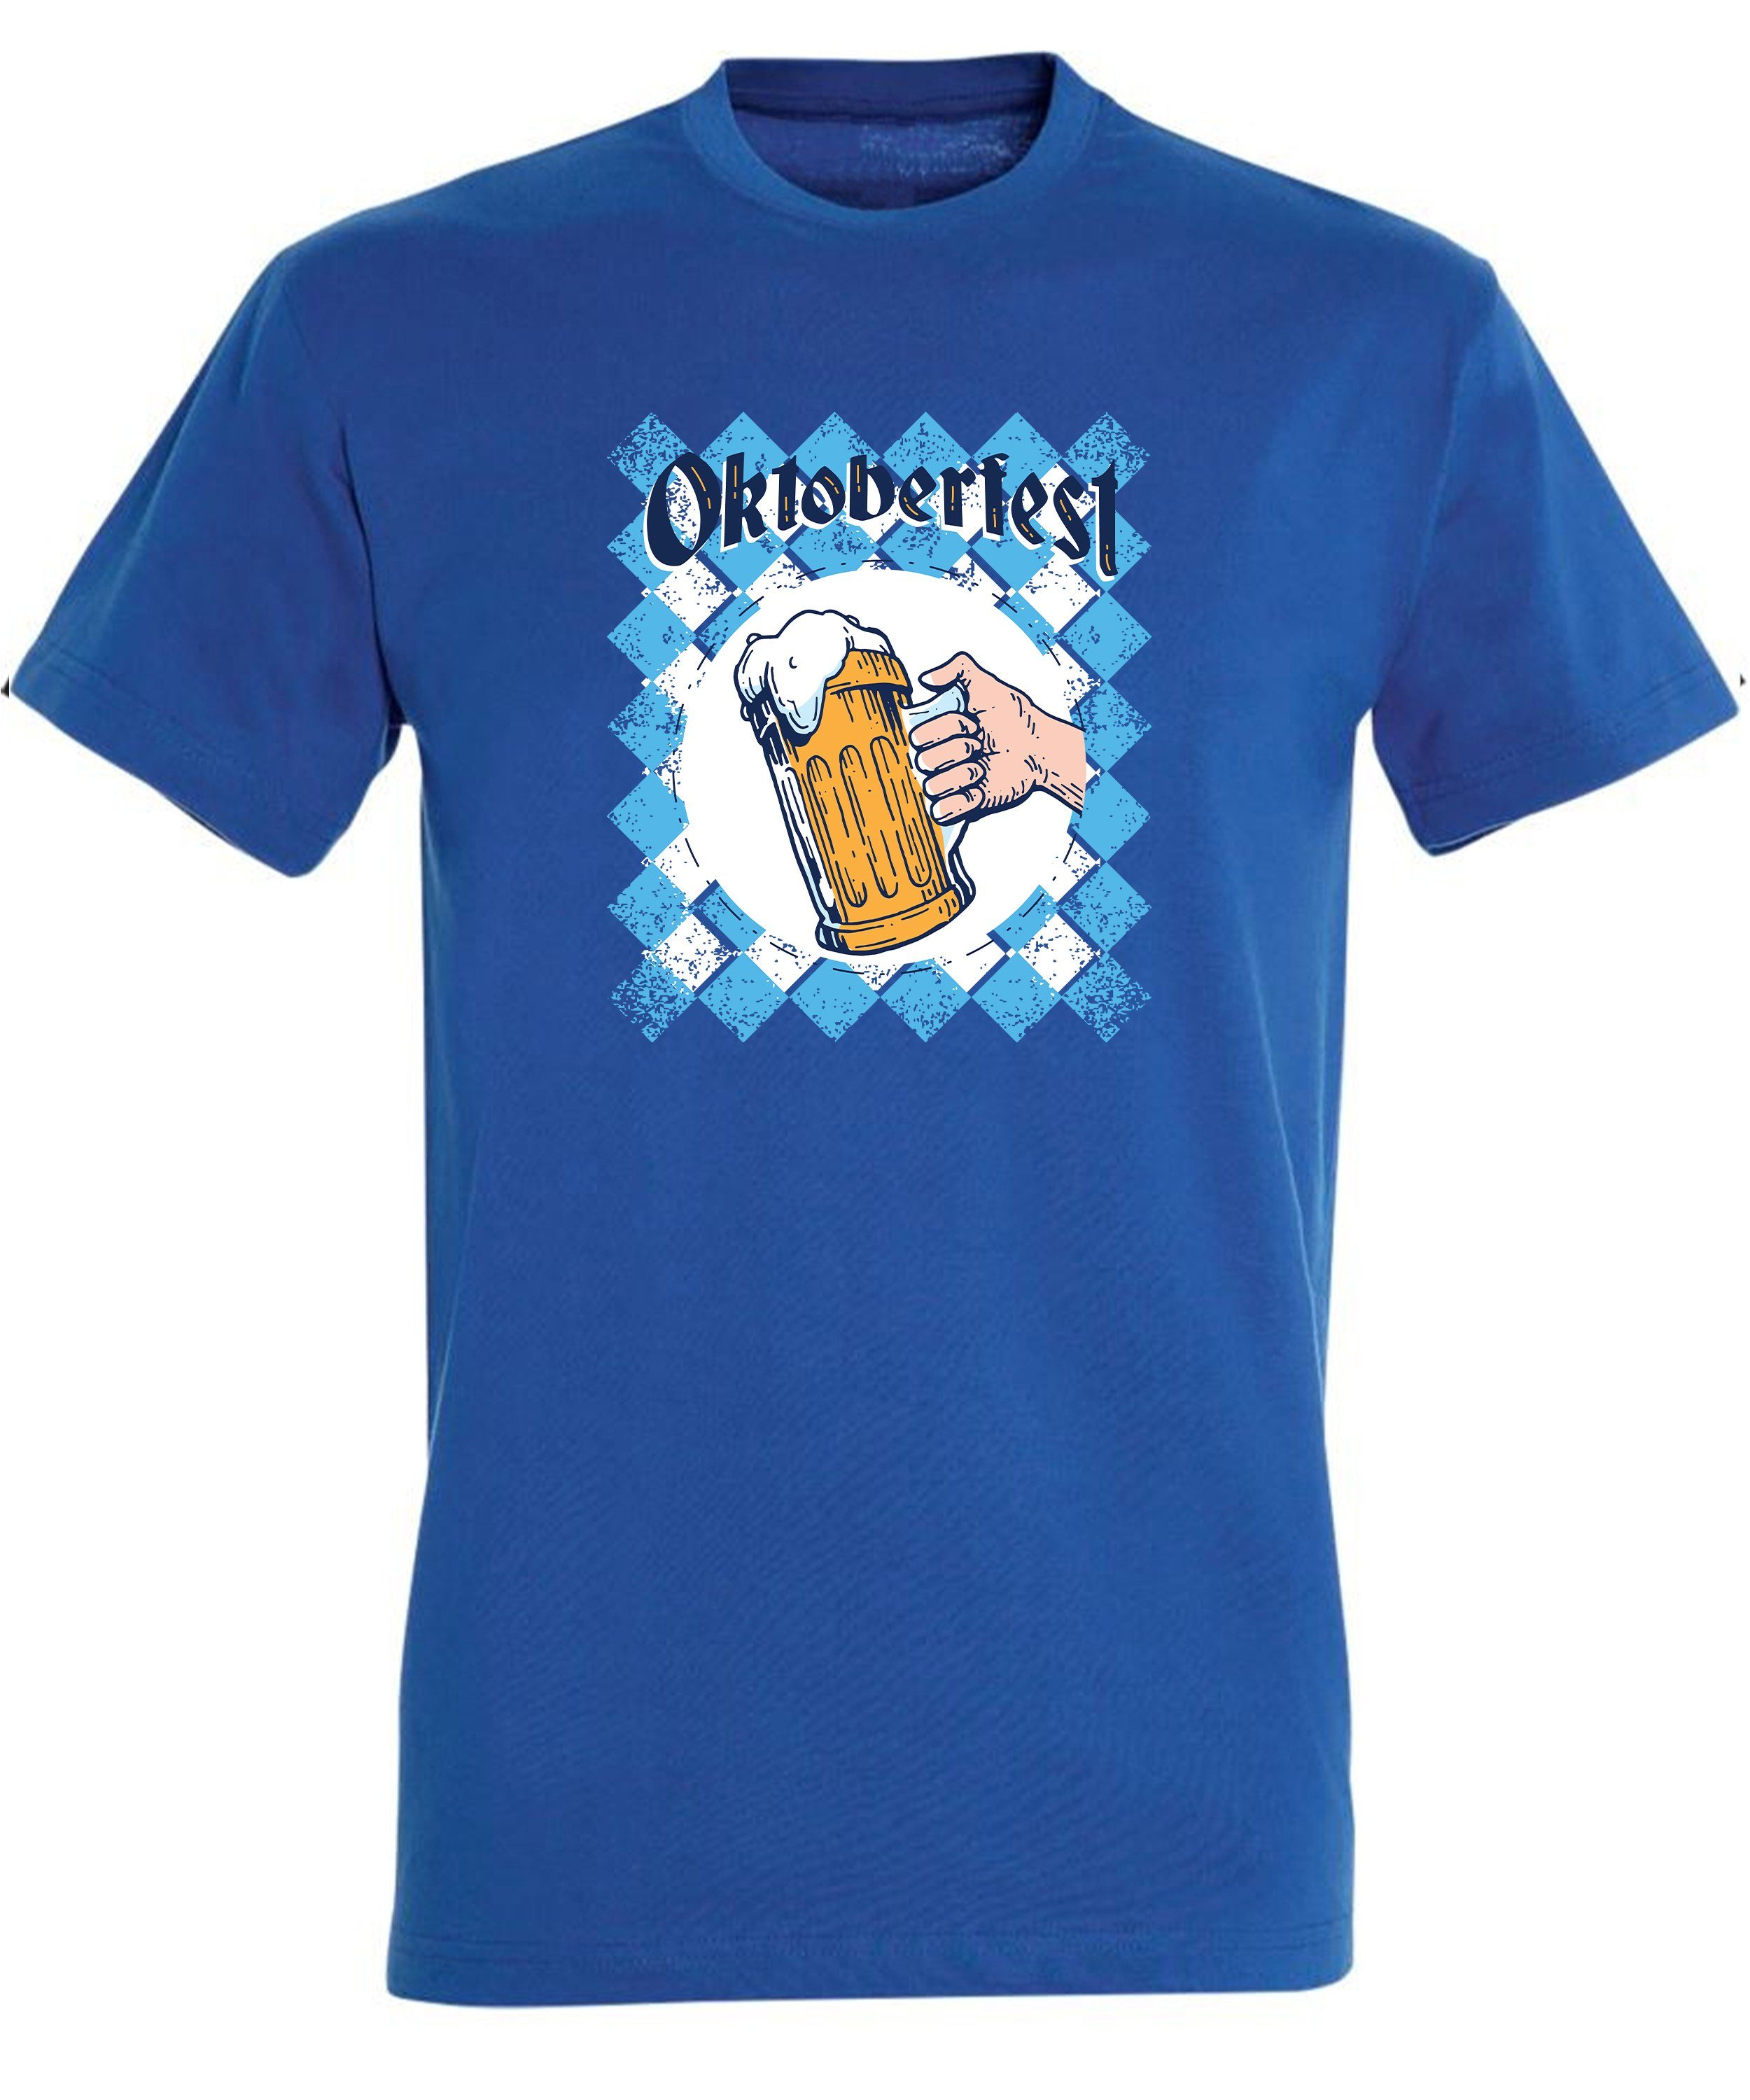 MyDesign24 T-Shirt Herren Print Shirt Bierglas Baumwollshirt mit Fit, Trinkshirt - royal blau Oktoberfest Regular i319 T-Shirt Aufdruck